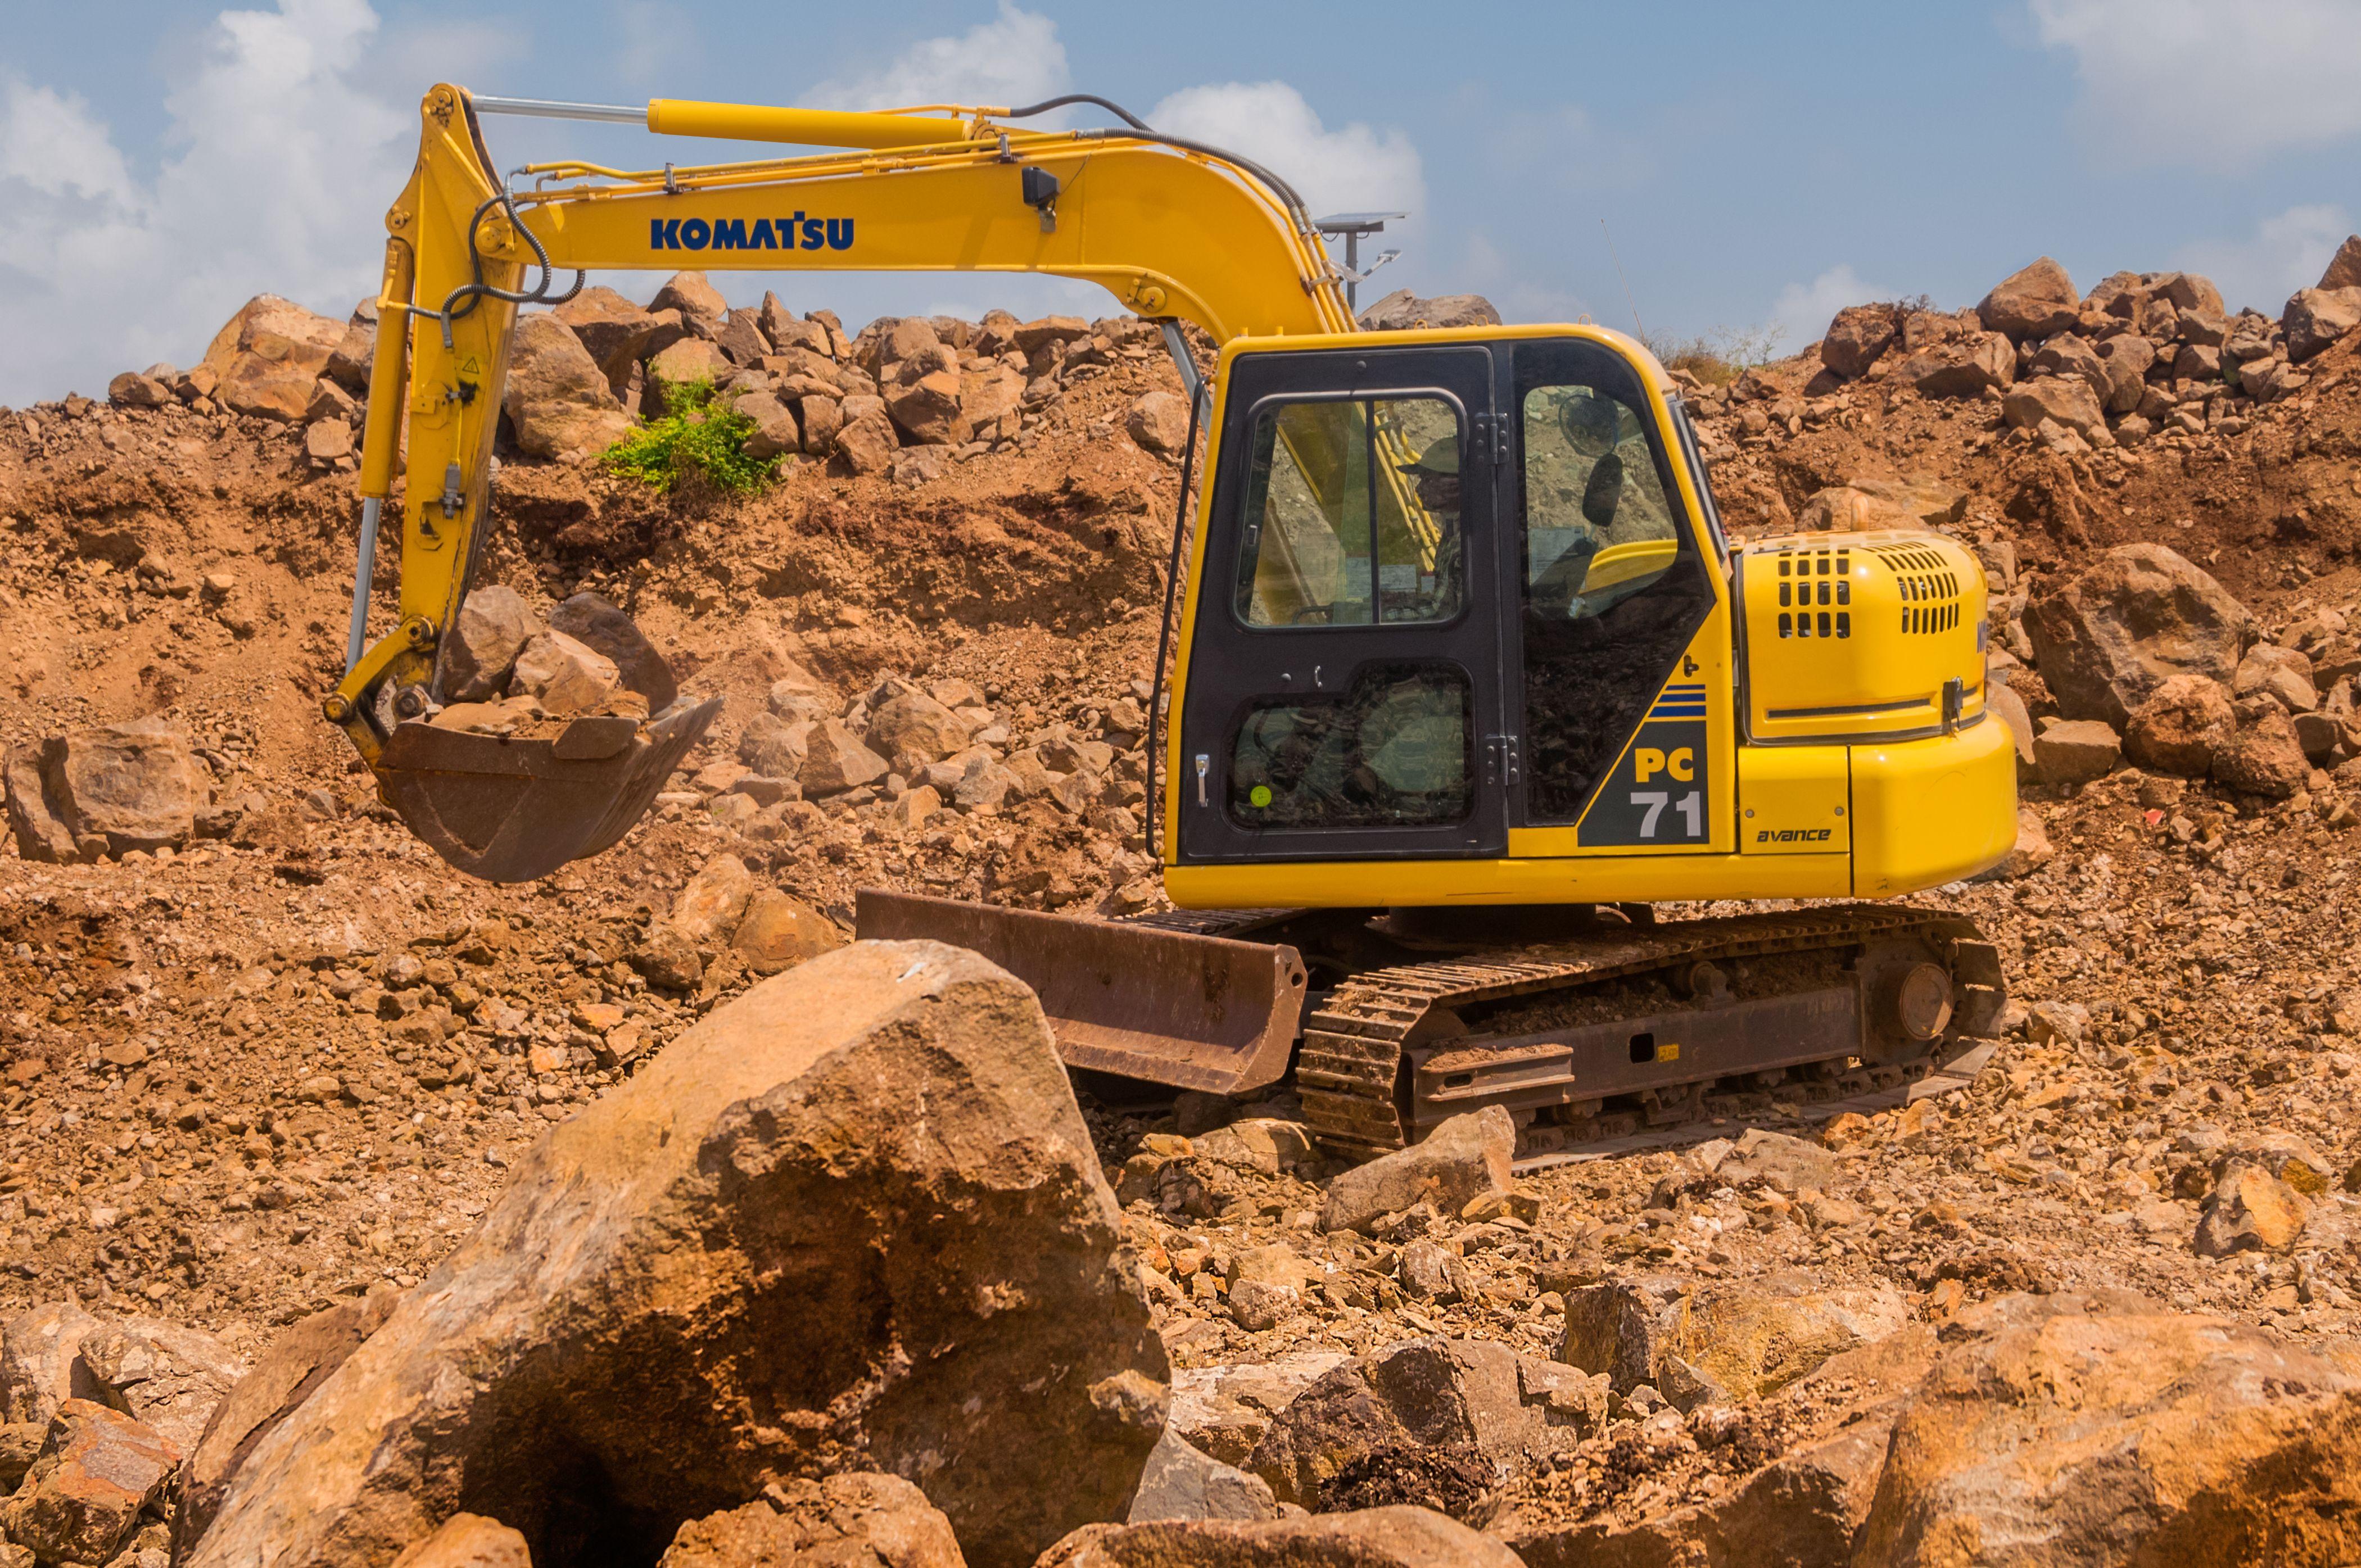 Komatsu Equipment Logo - Komatsu PC71 Excavator - Construction & Mining Equipment India | L&T ...